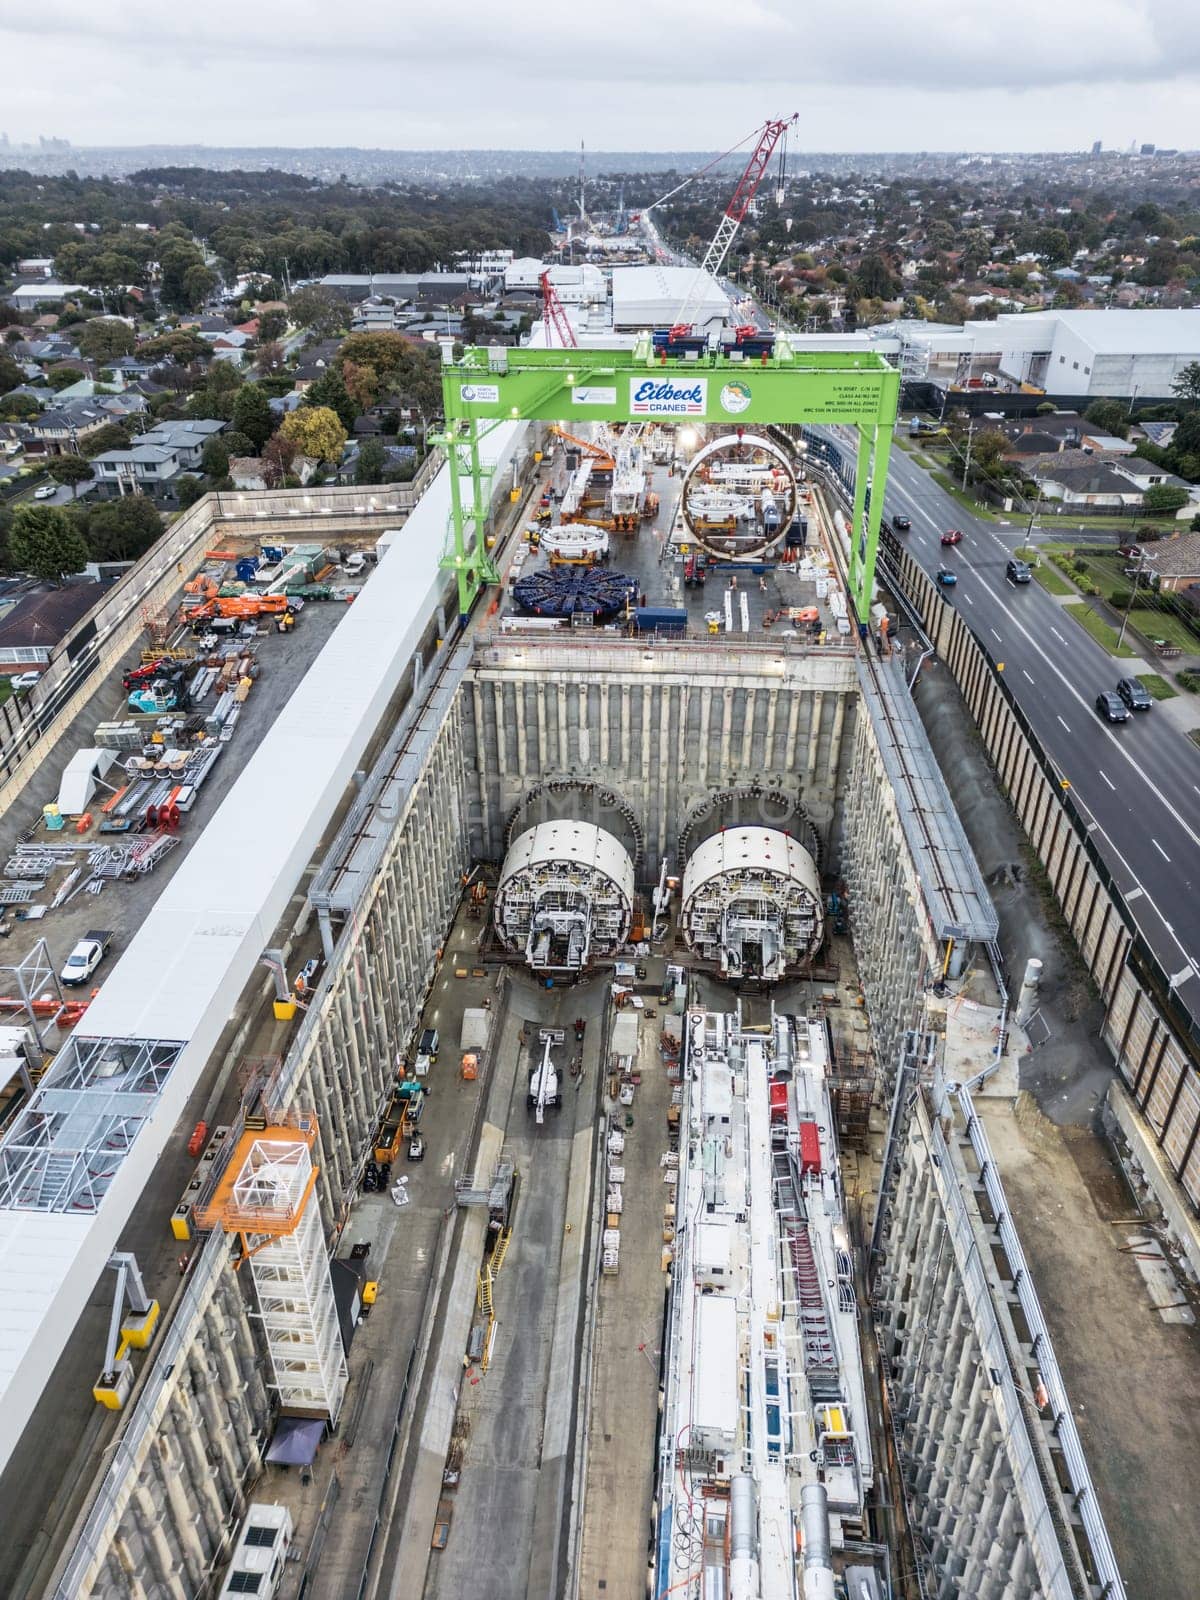 North East Link Under Construction in Melbourne Australia by FiledIMAGE